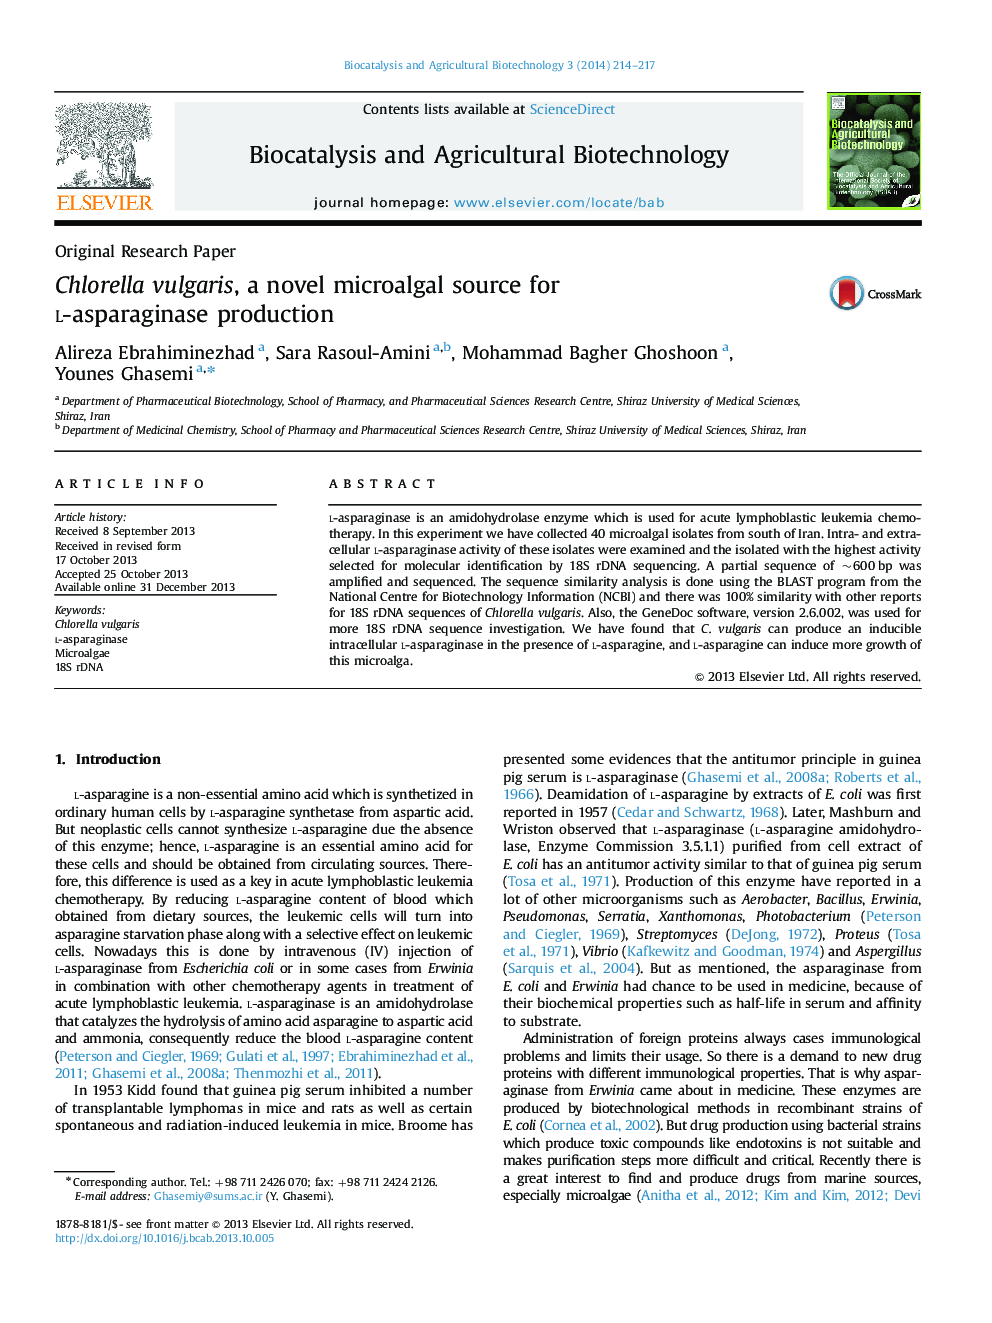 Chlorella vulgaris, a novel microalgal source for l-asparaginase production